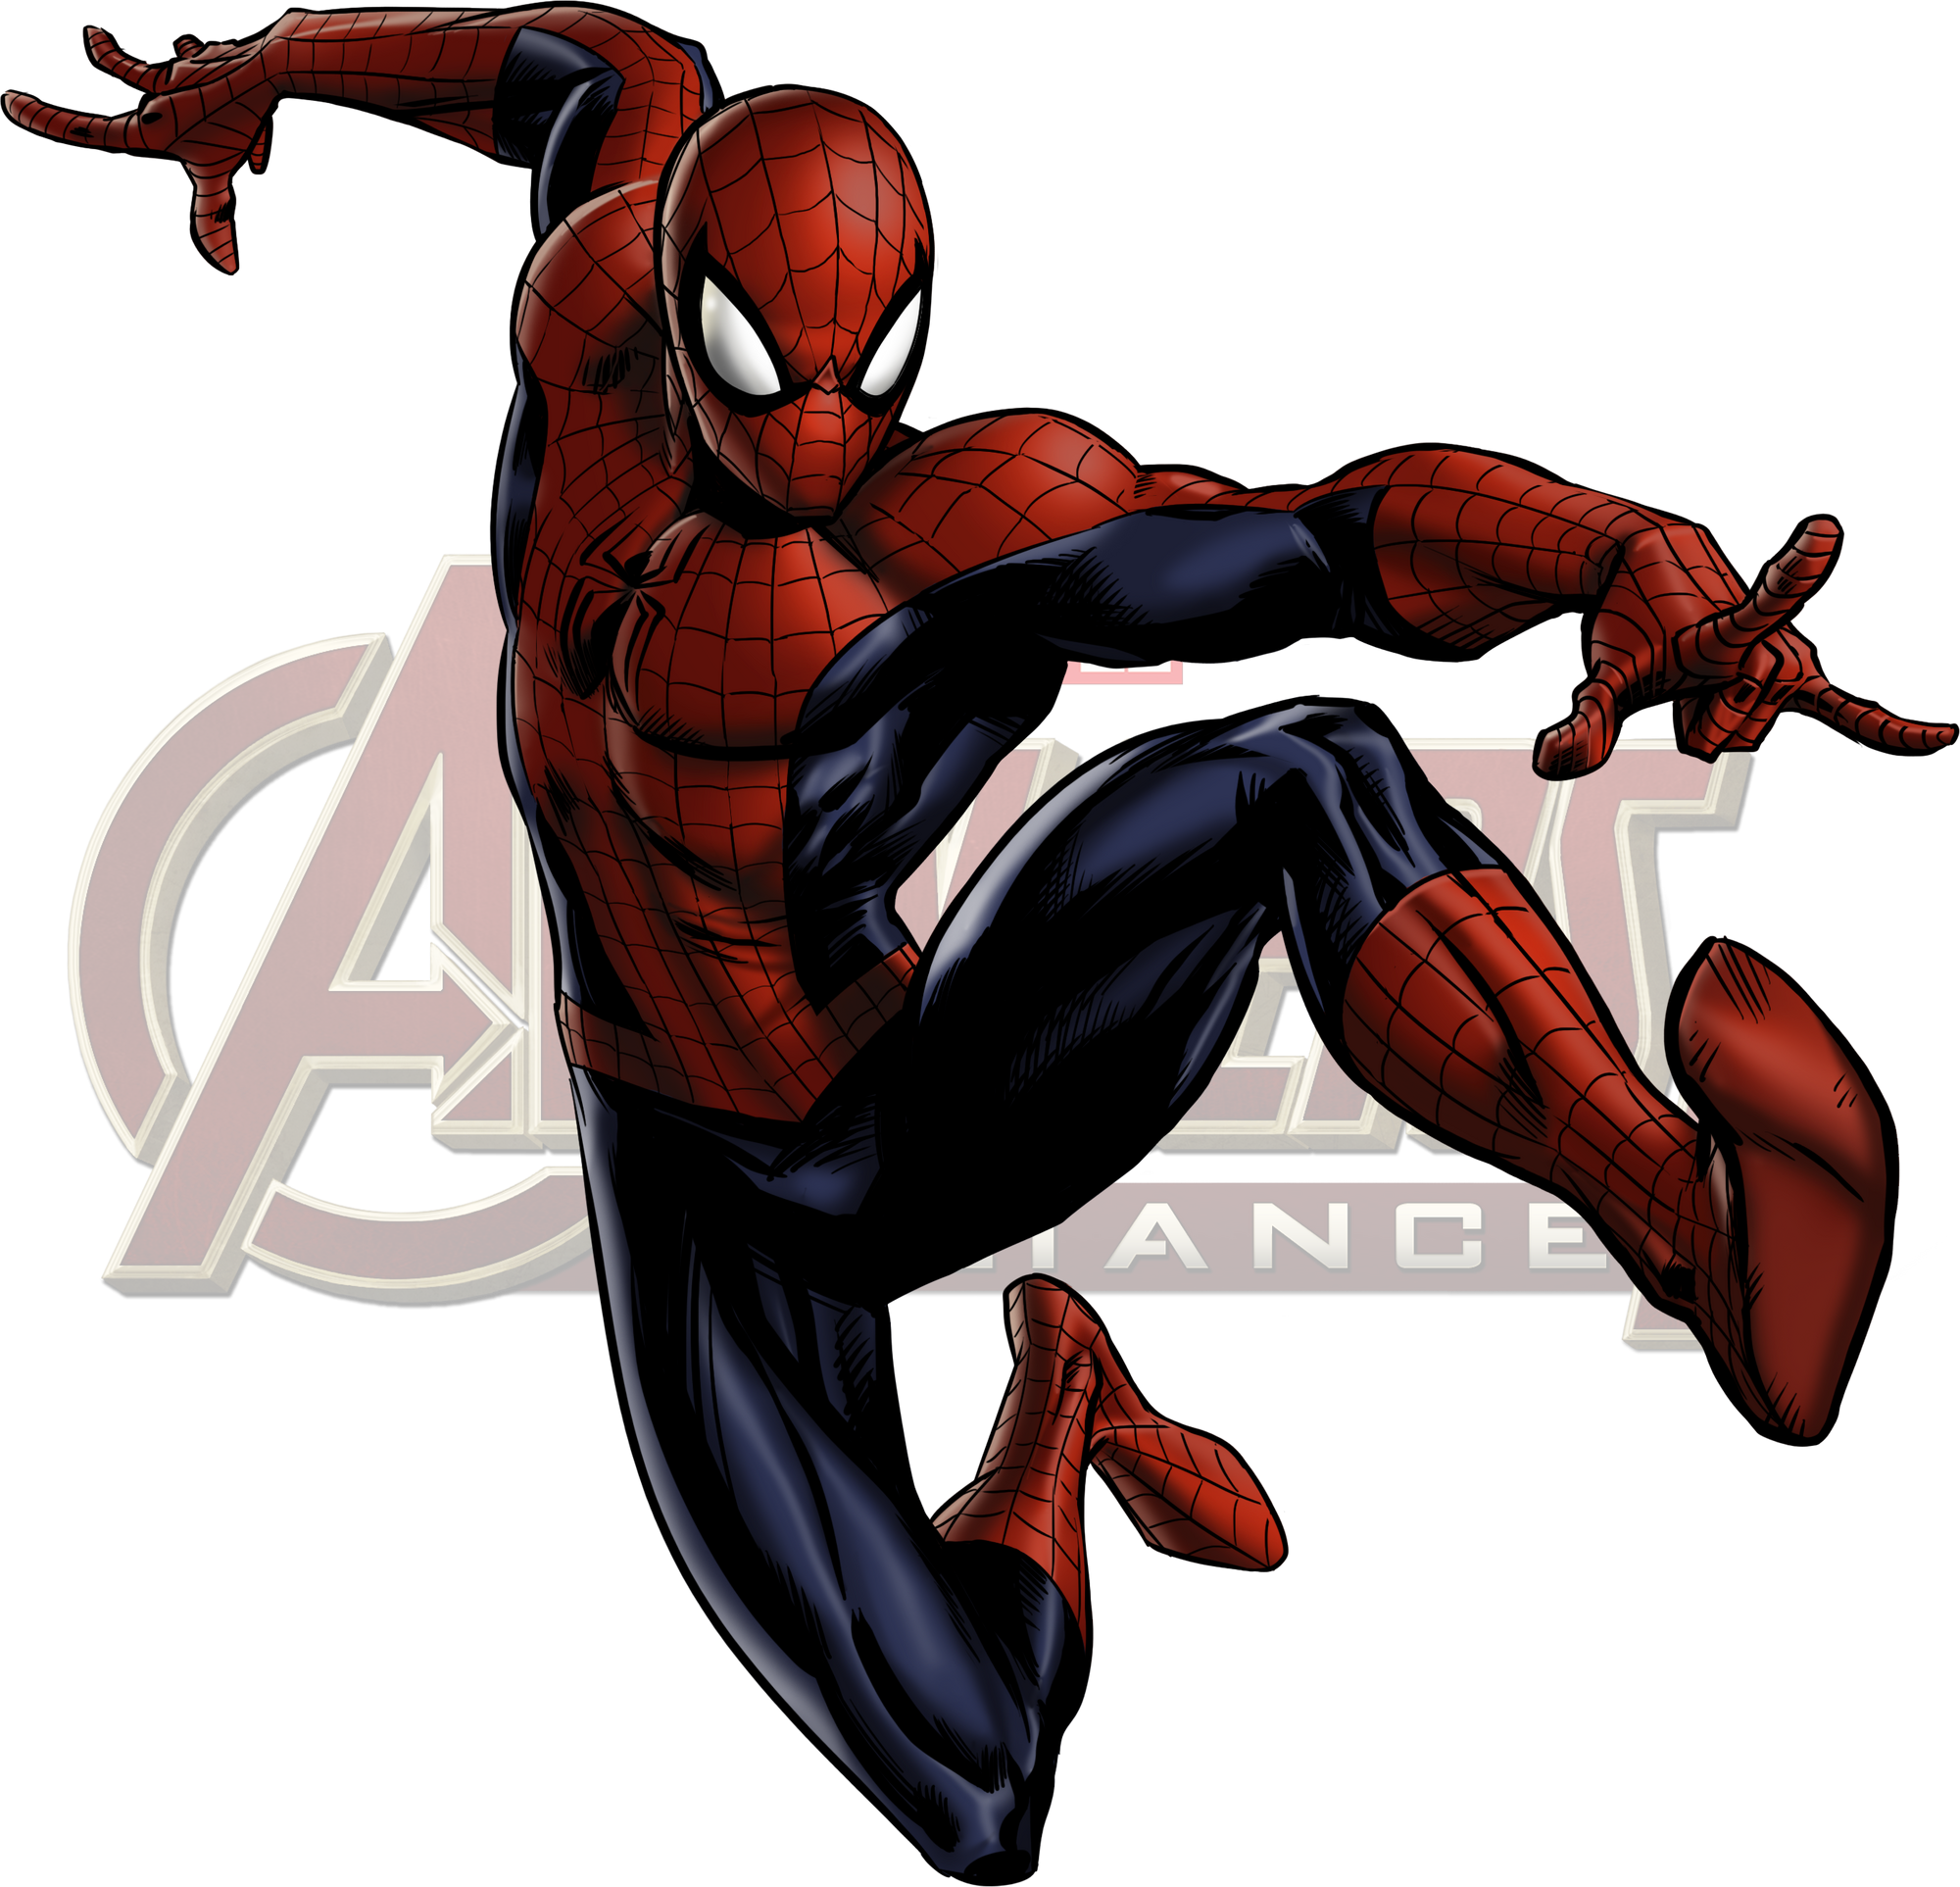 Spider Man Marvel Avengers Alliance 2 Wikia Fandom Powered By Wikia